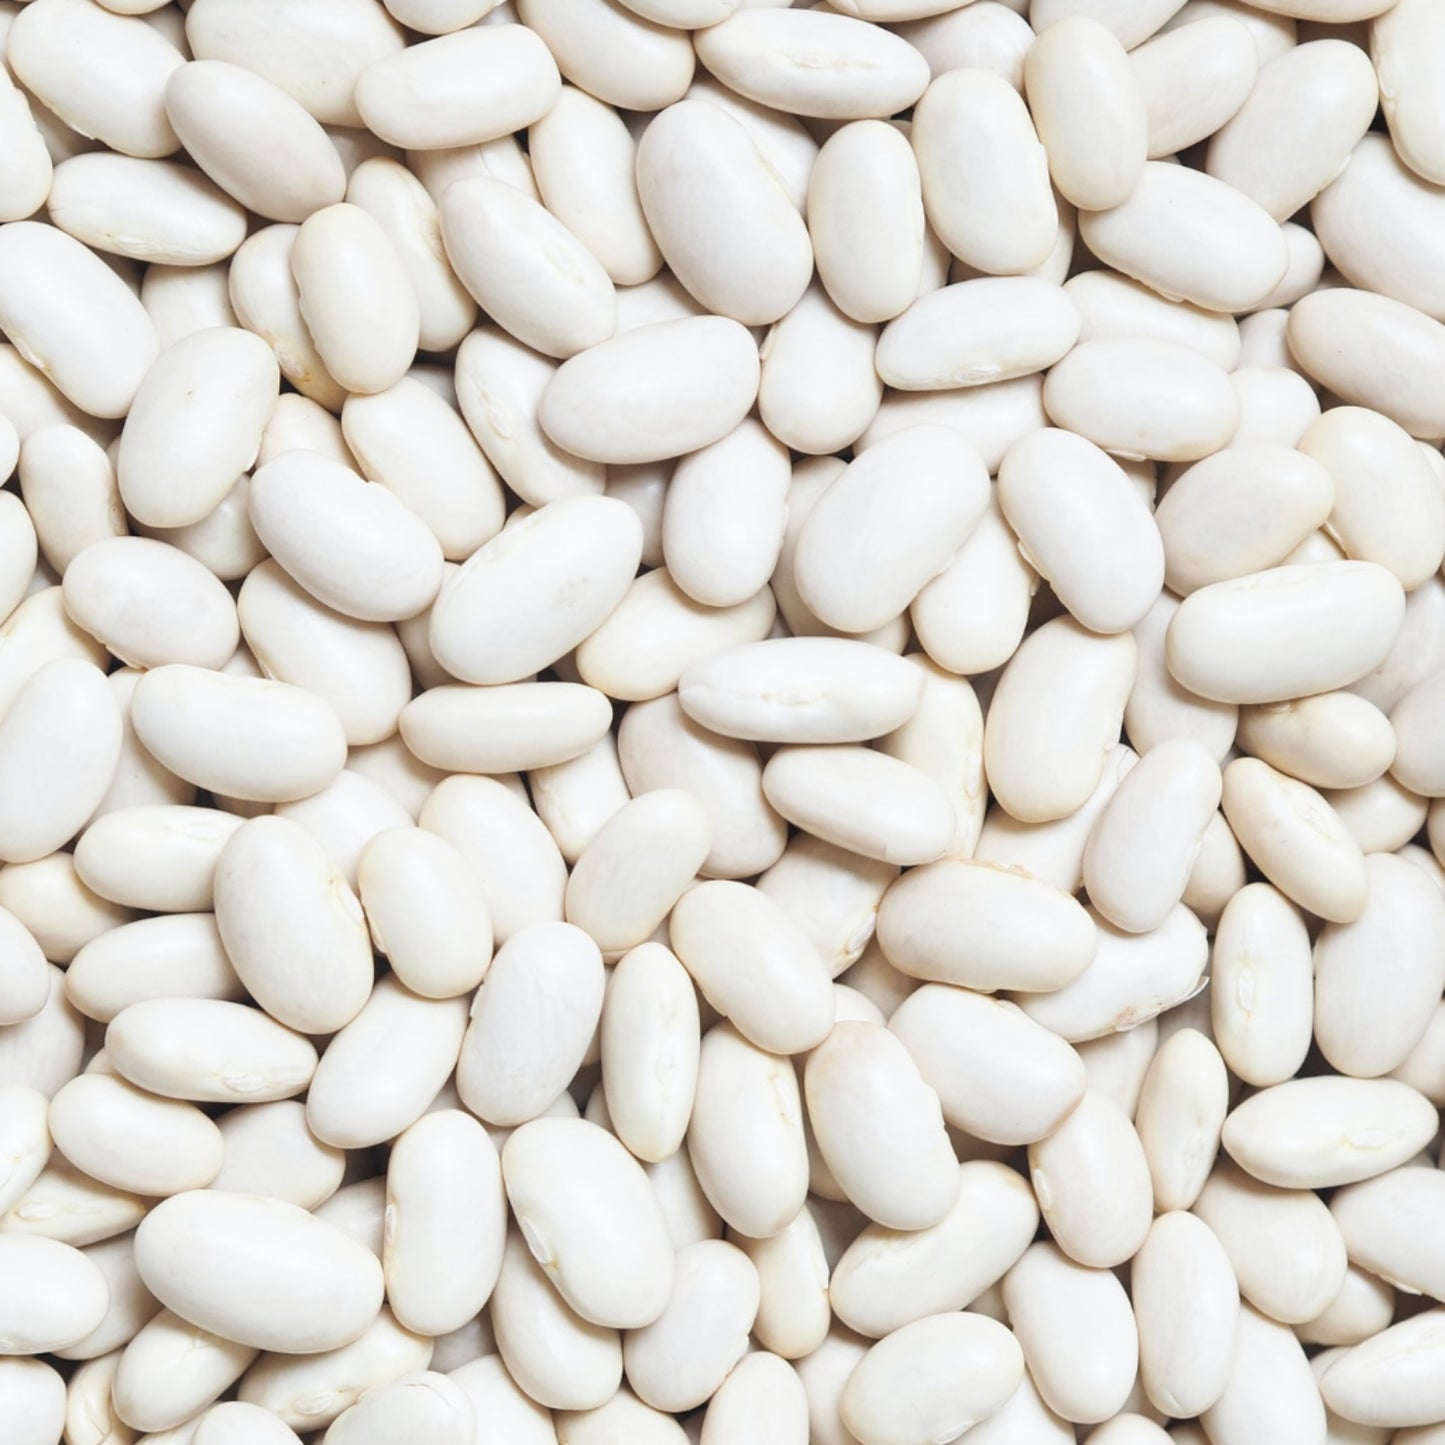 1 White Kidney Bean Extract 10:1 - 120 Capsules